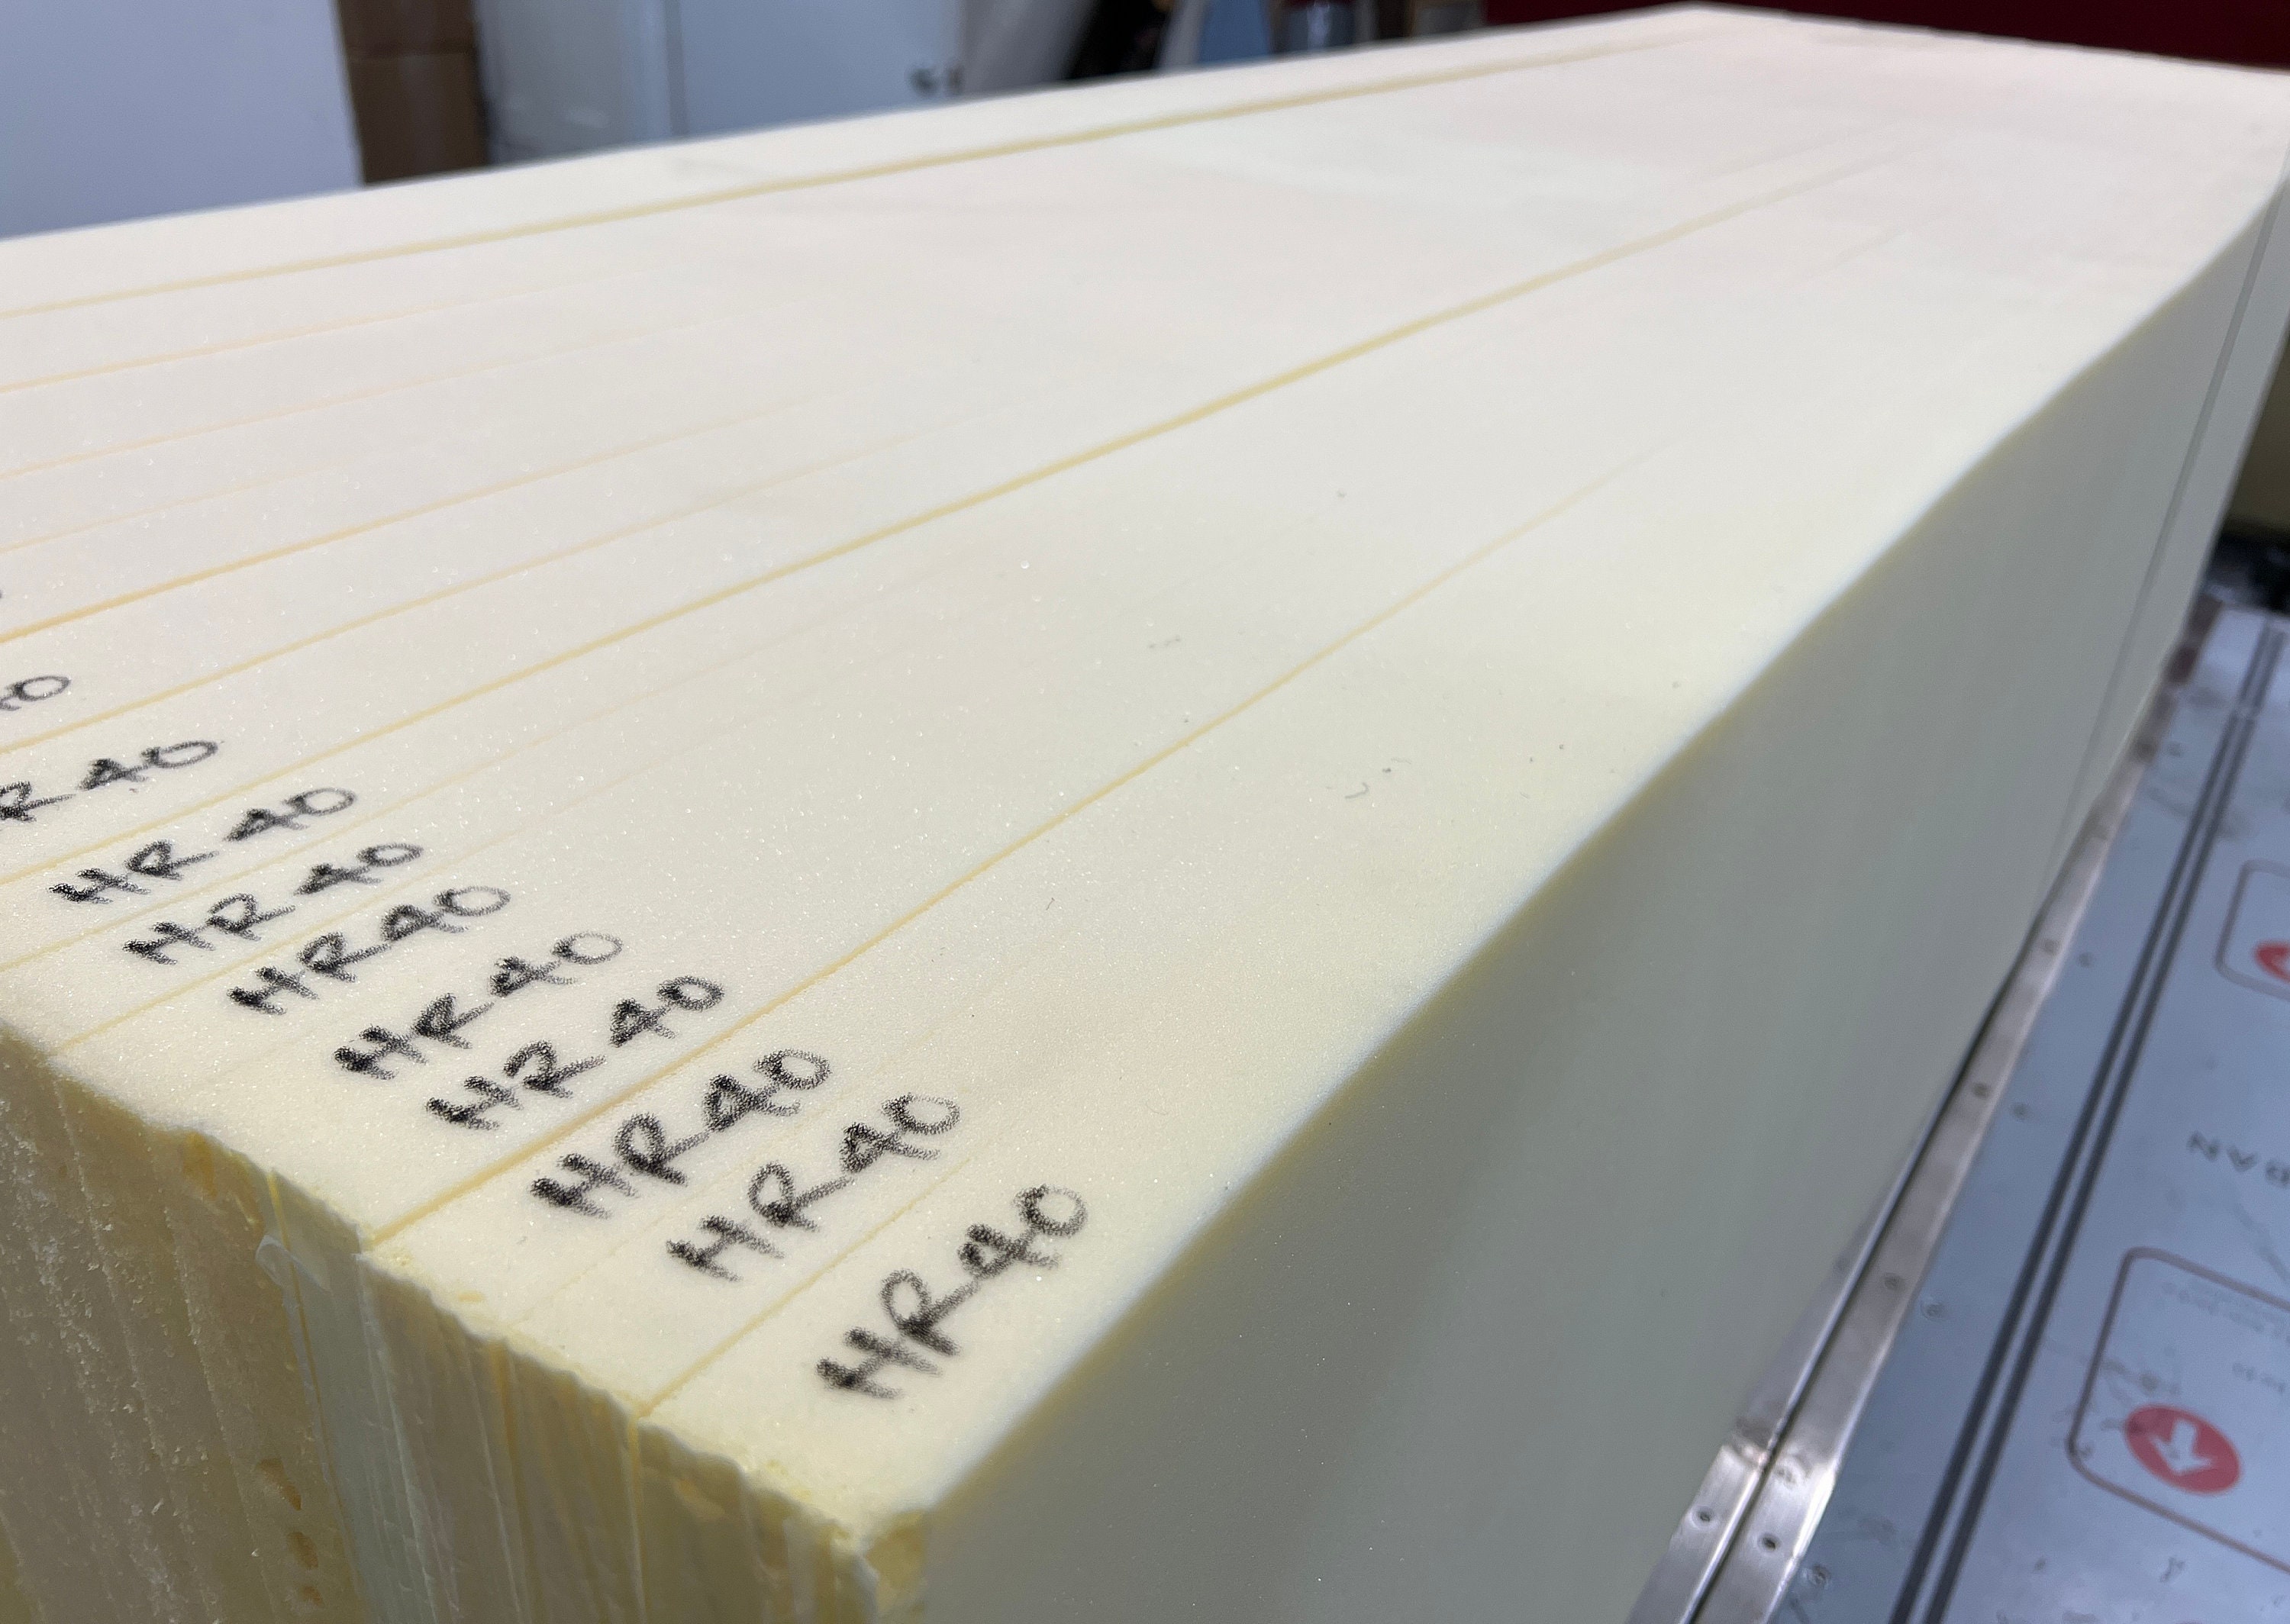 High Density Upholstery Foam Sheet (3 x 40 x 72)